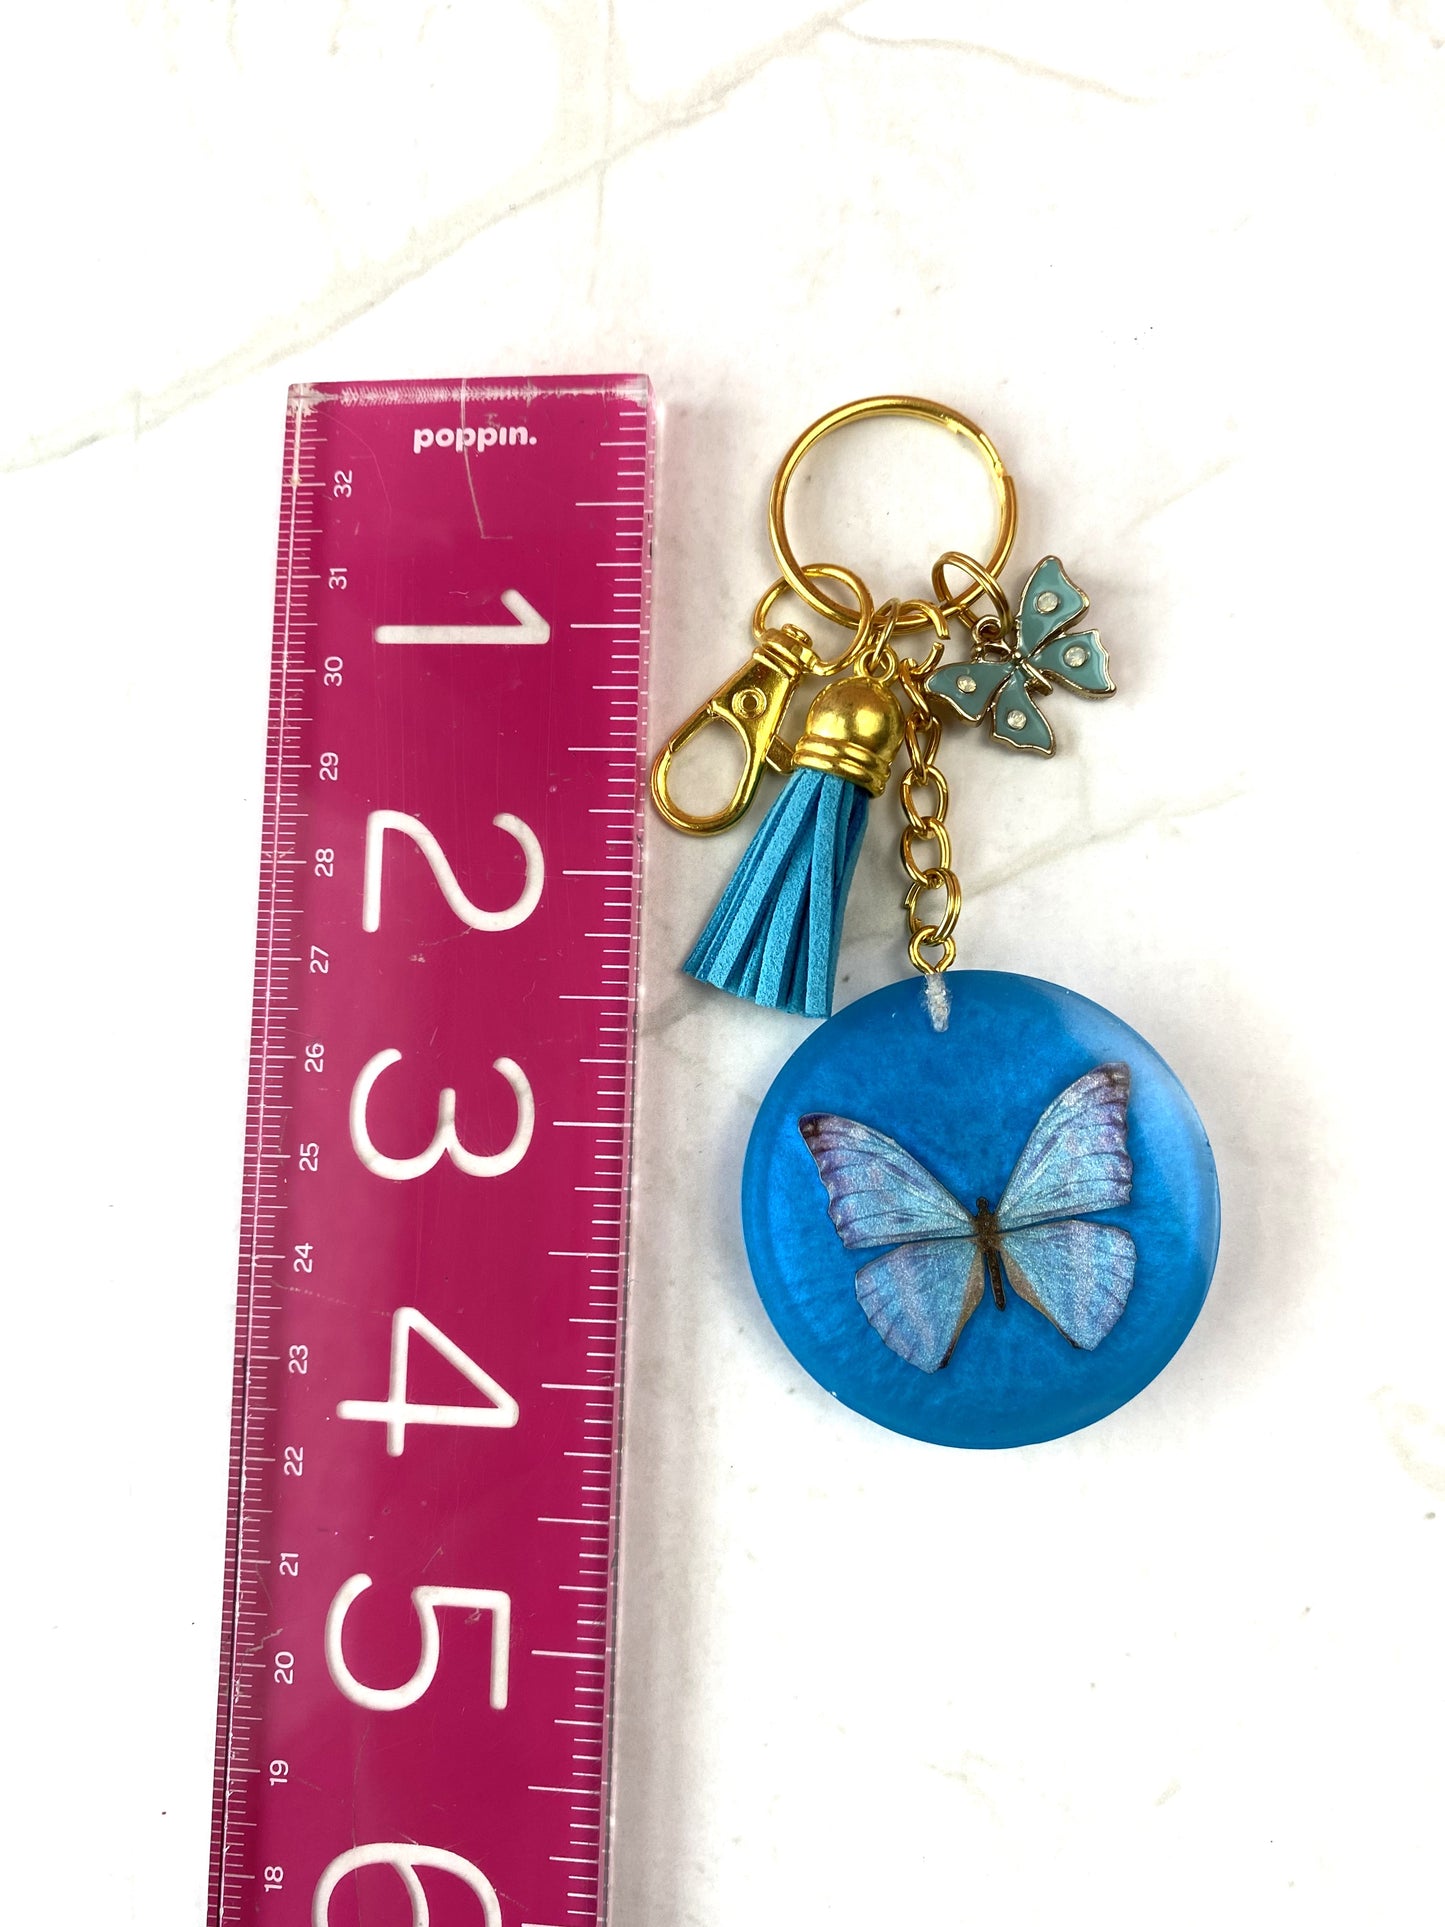 Butterfly Keychain | Bright Blue | Handmade Accessories